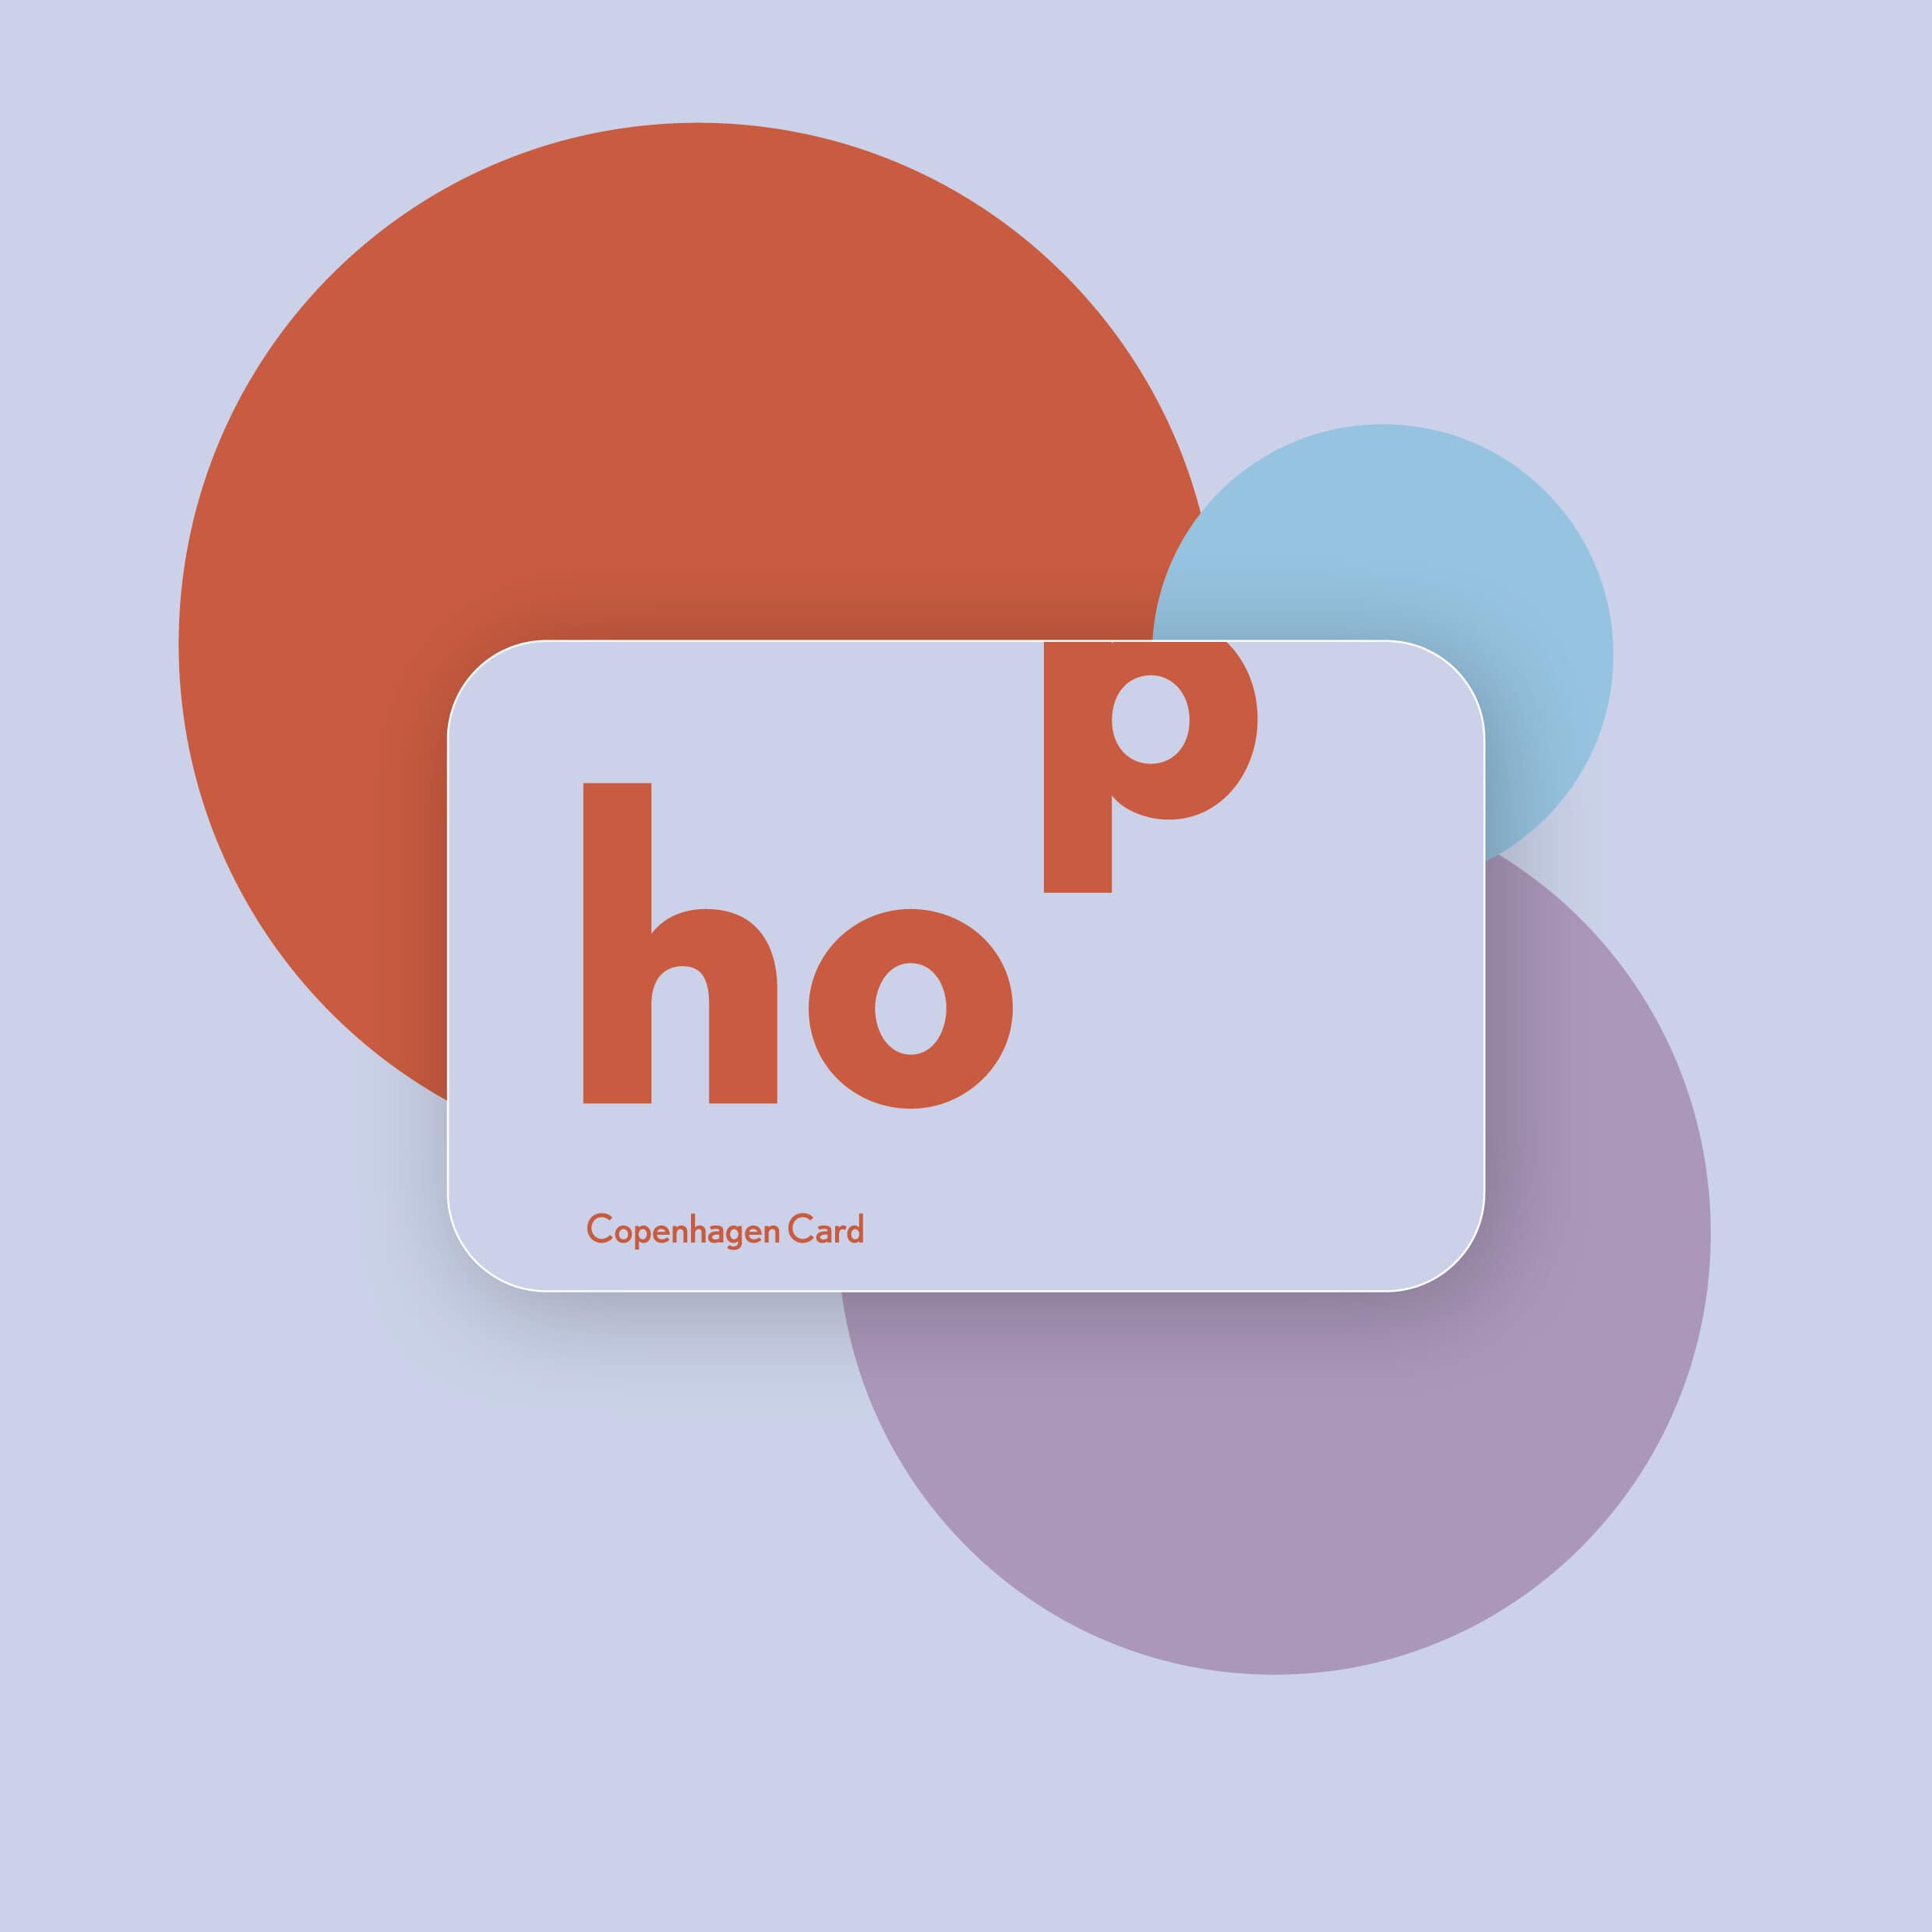 Copenhagen Card - Hop